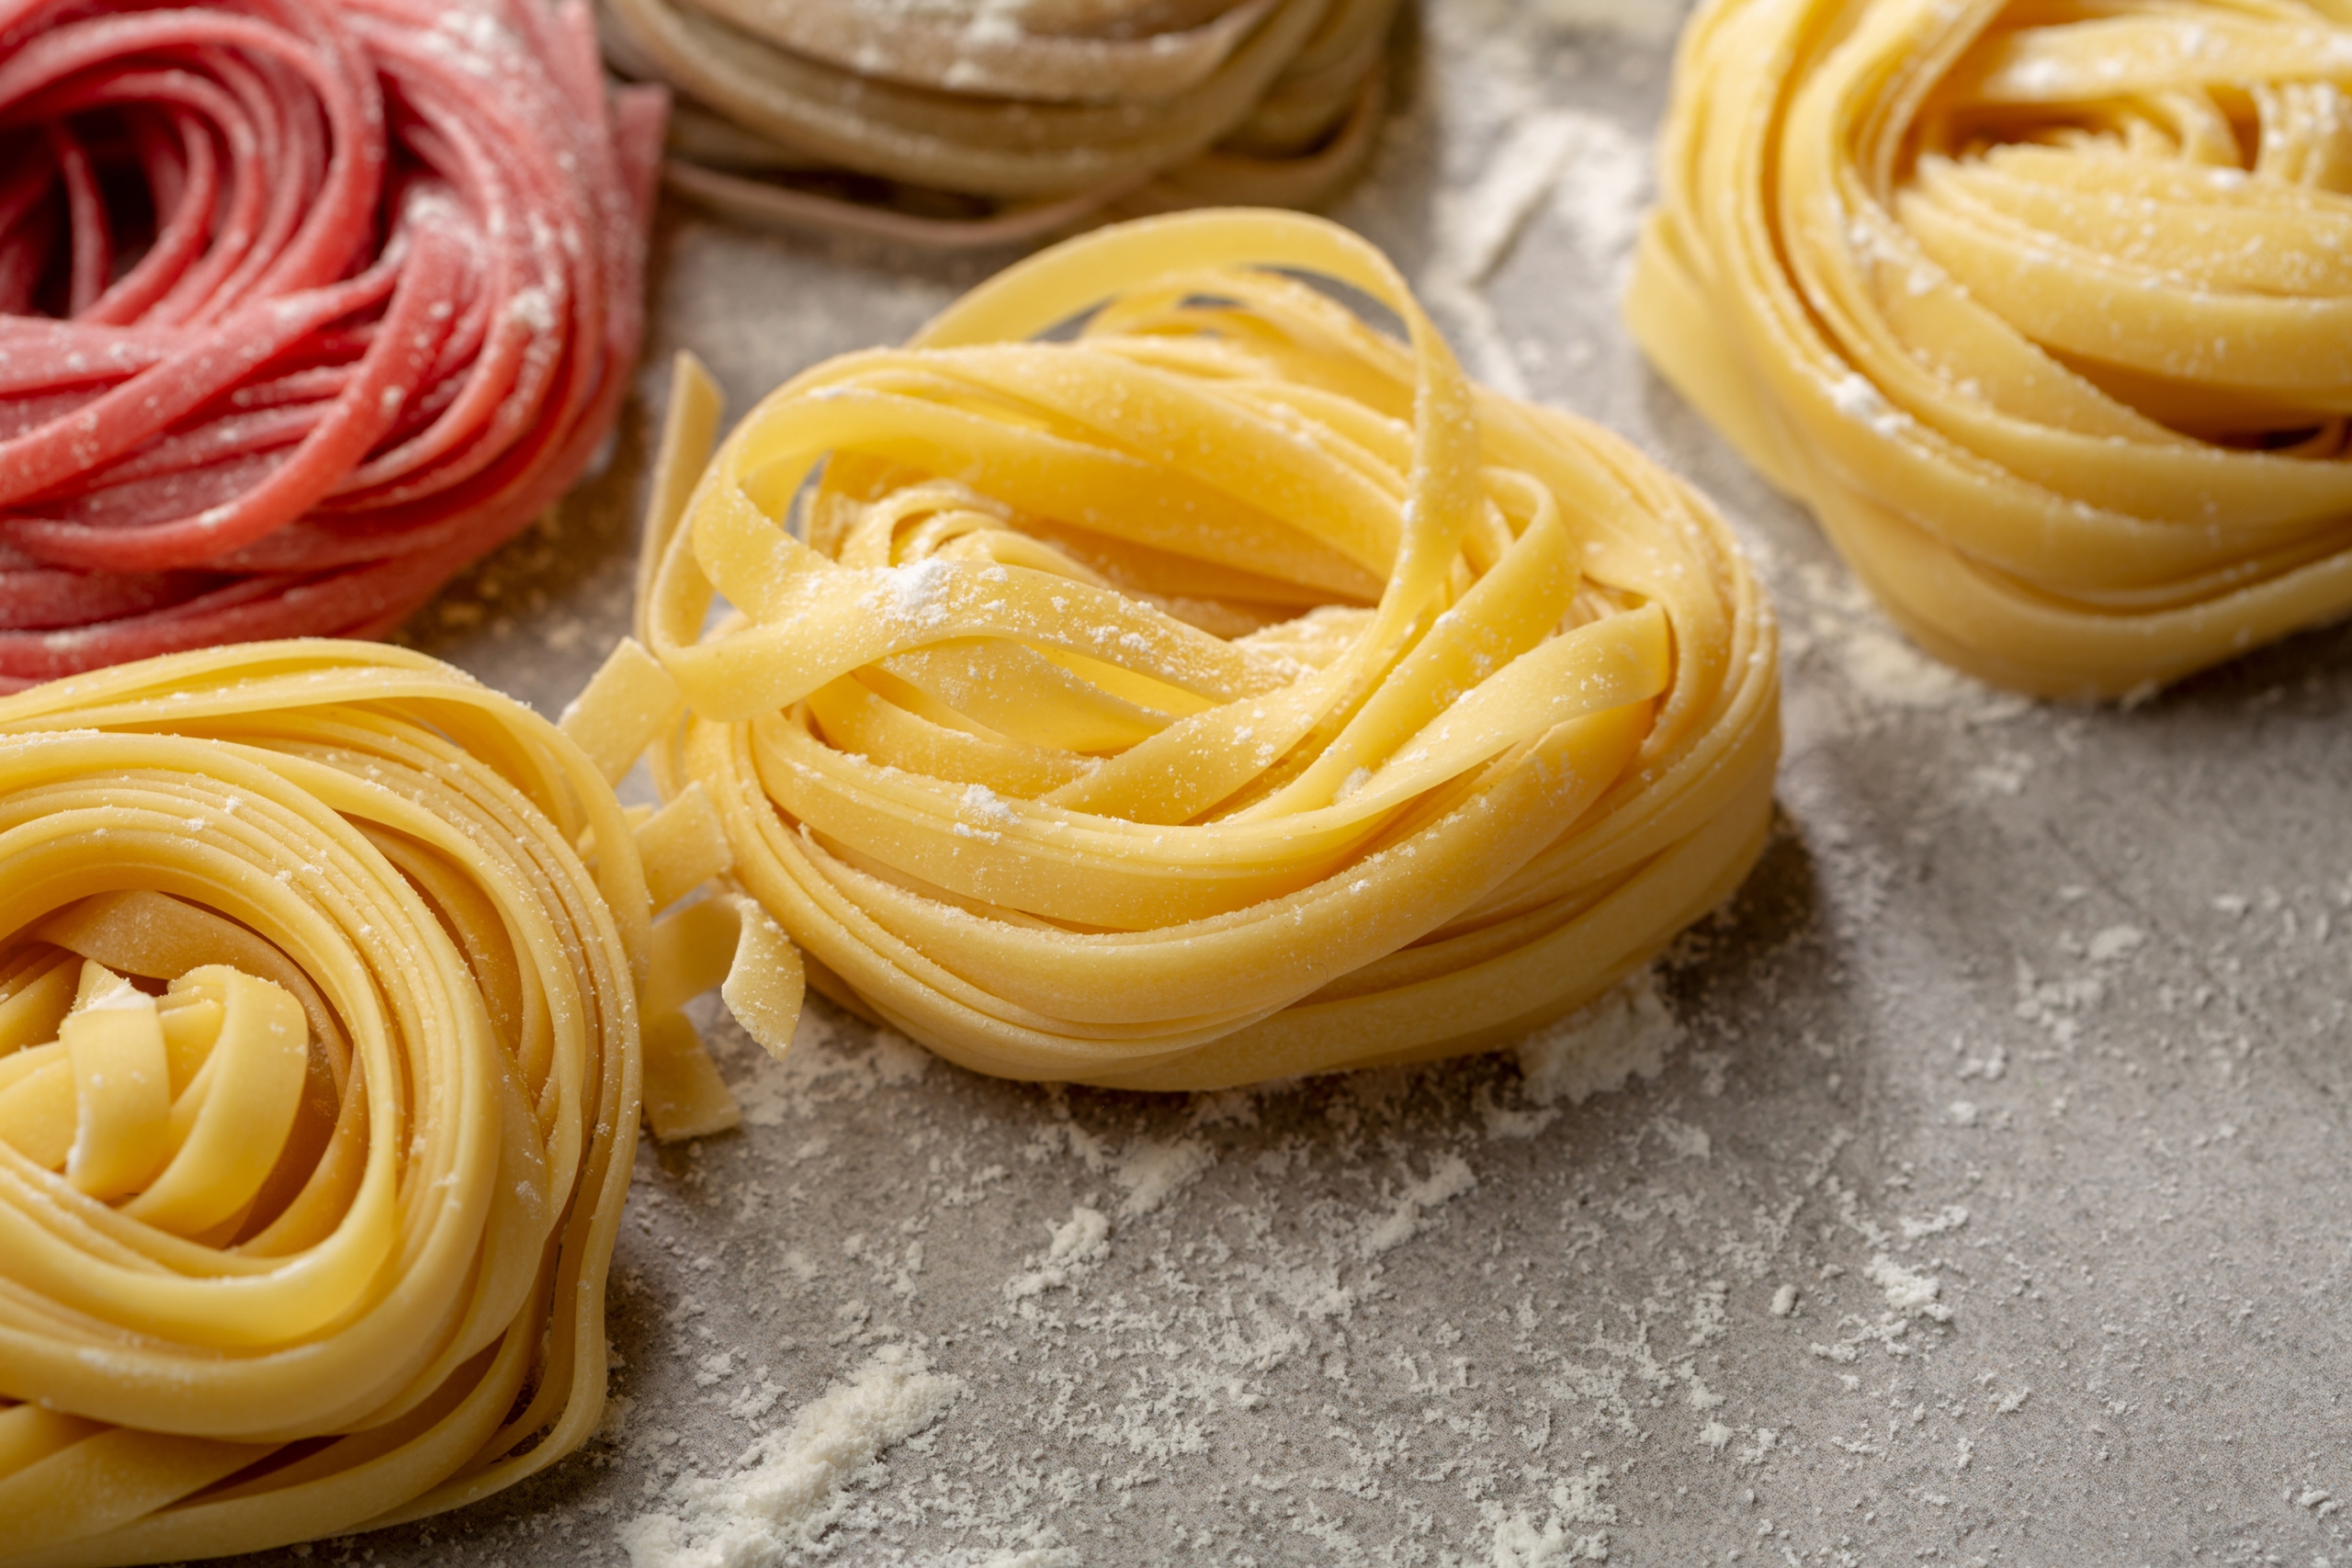 A variety of Italian pasta noddles.